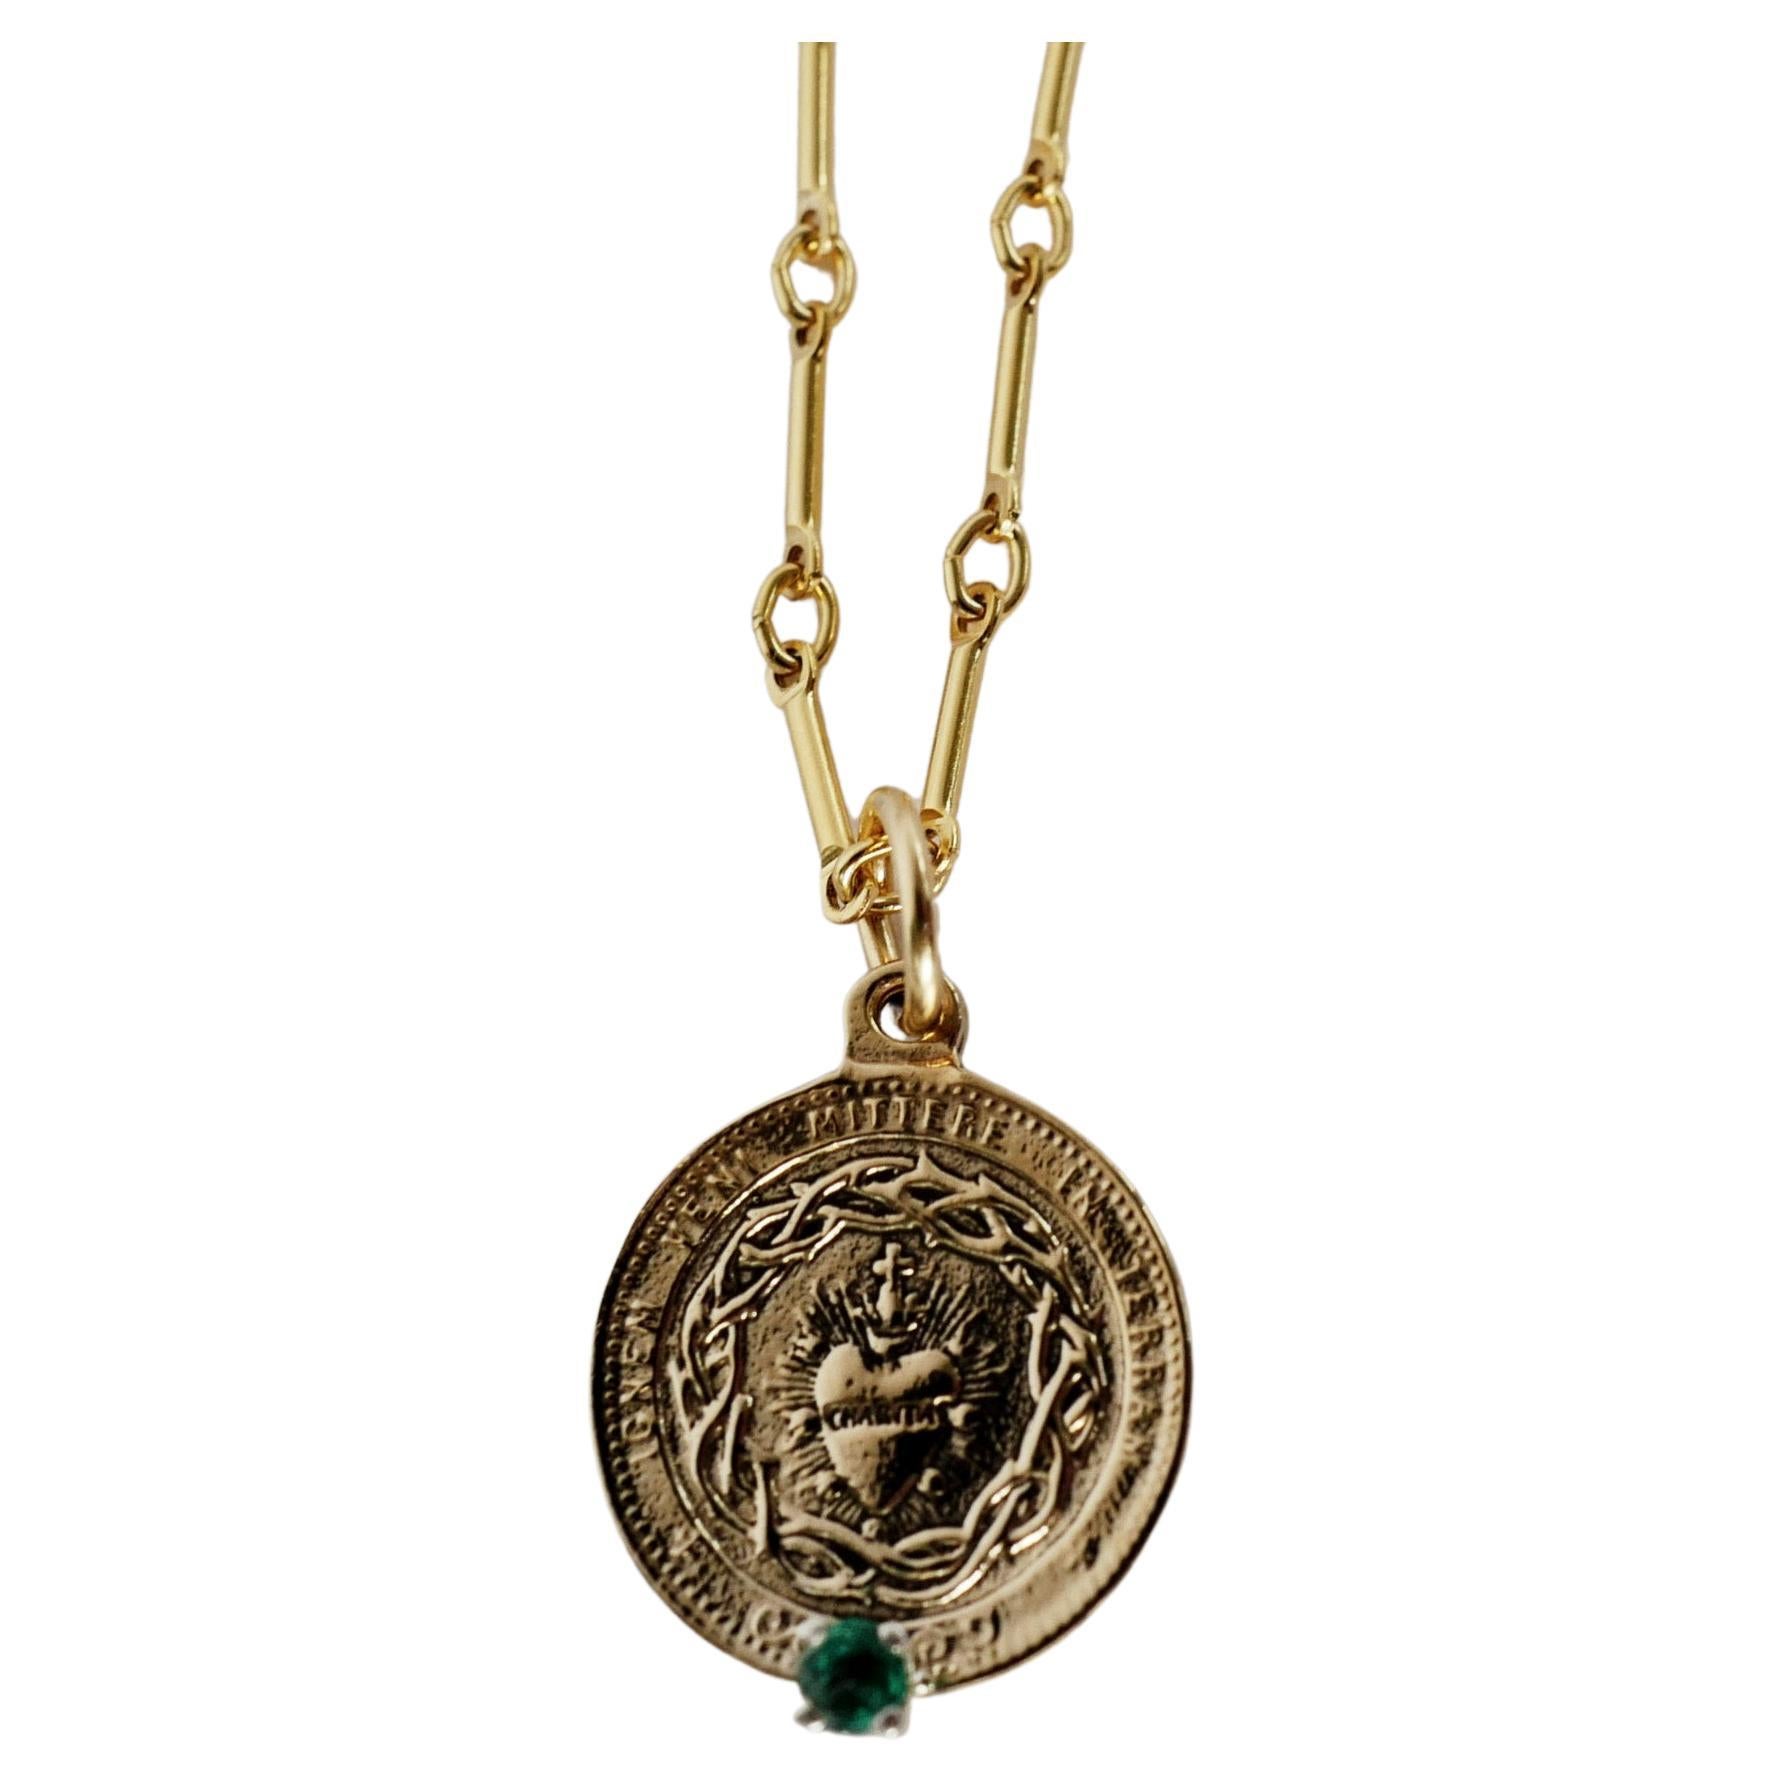 Tourmaline Sacred Heart Medal Pendant Gold Filled Chain Necklace 10 k Gold Vermeil Medal 
J Dauphin
22